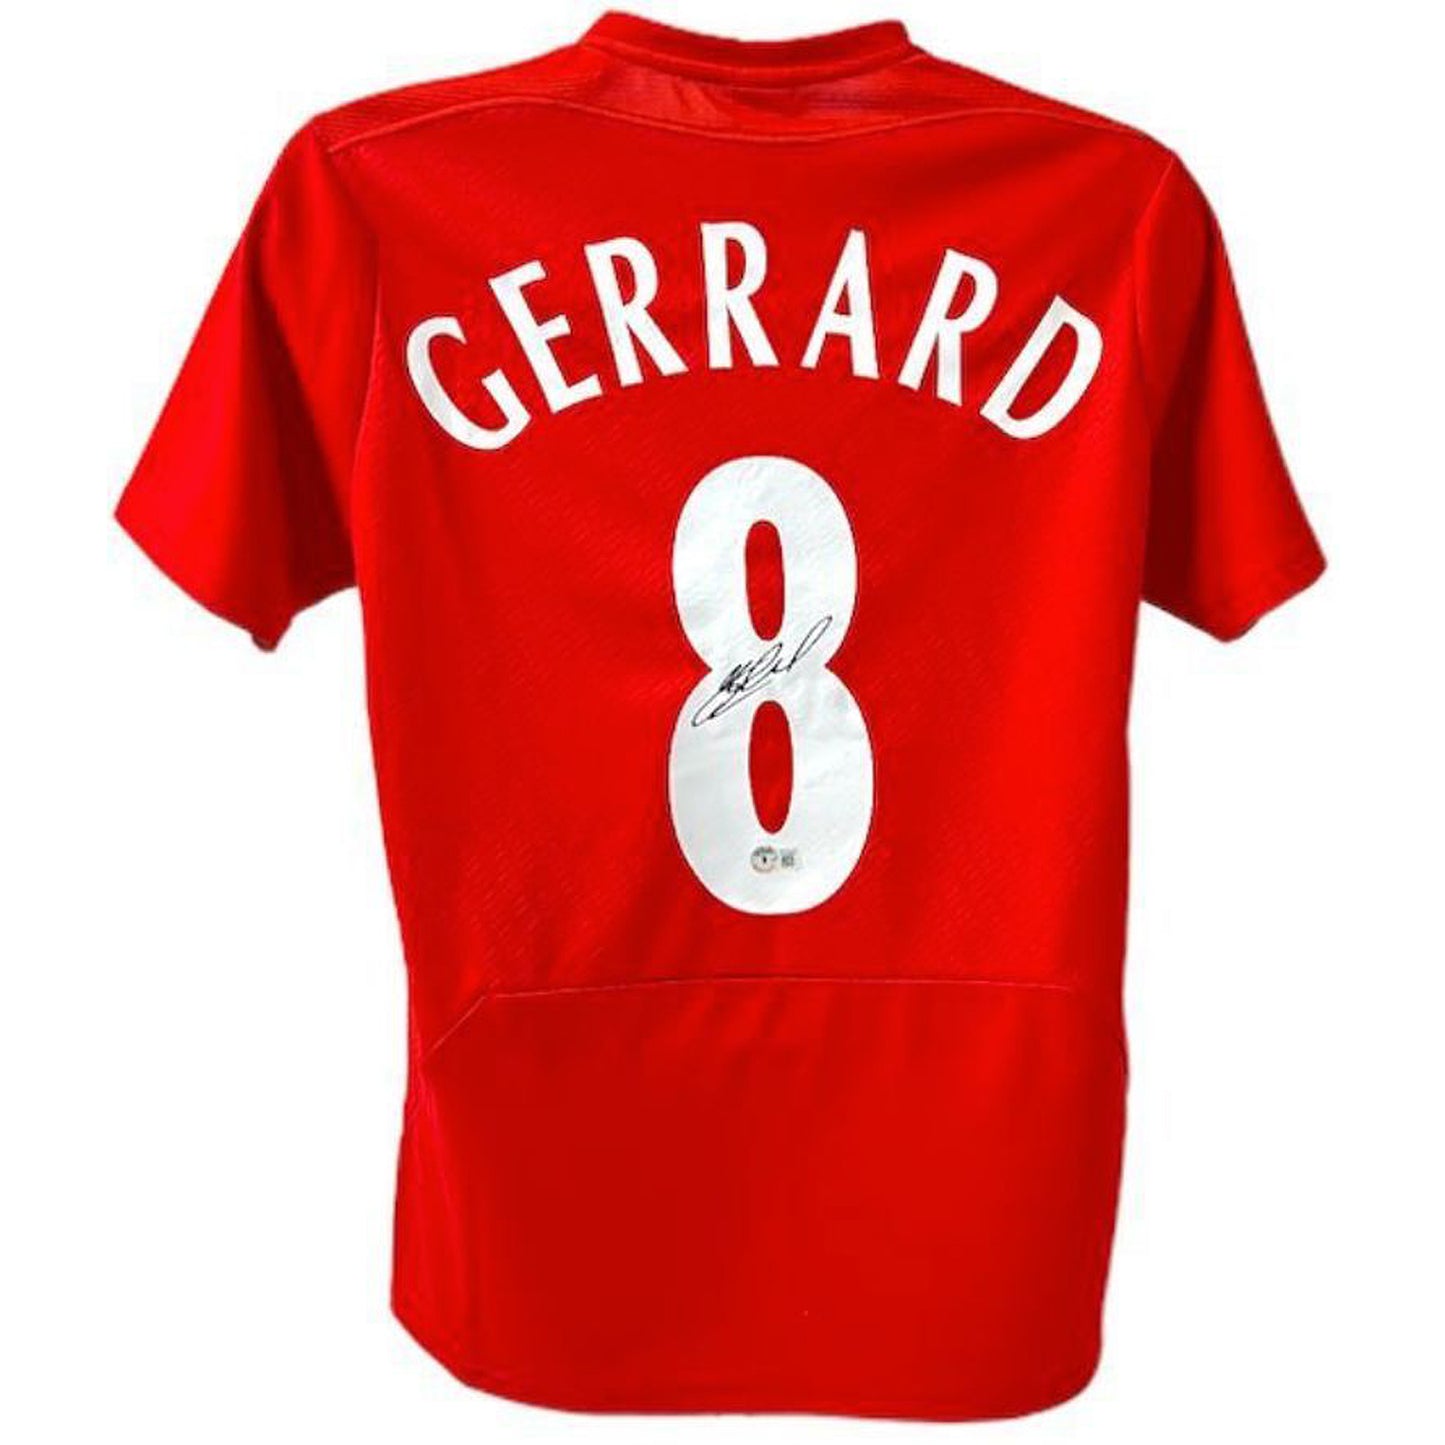 Steven Gerrard Autographed Liverpool (Red #8) Soccer Jersey - BAS